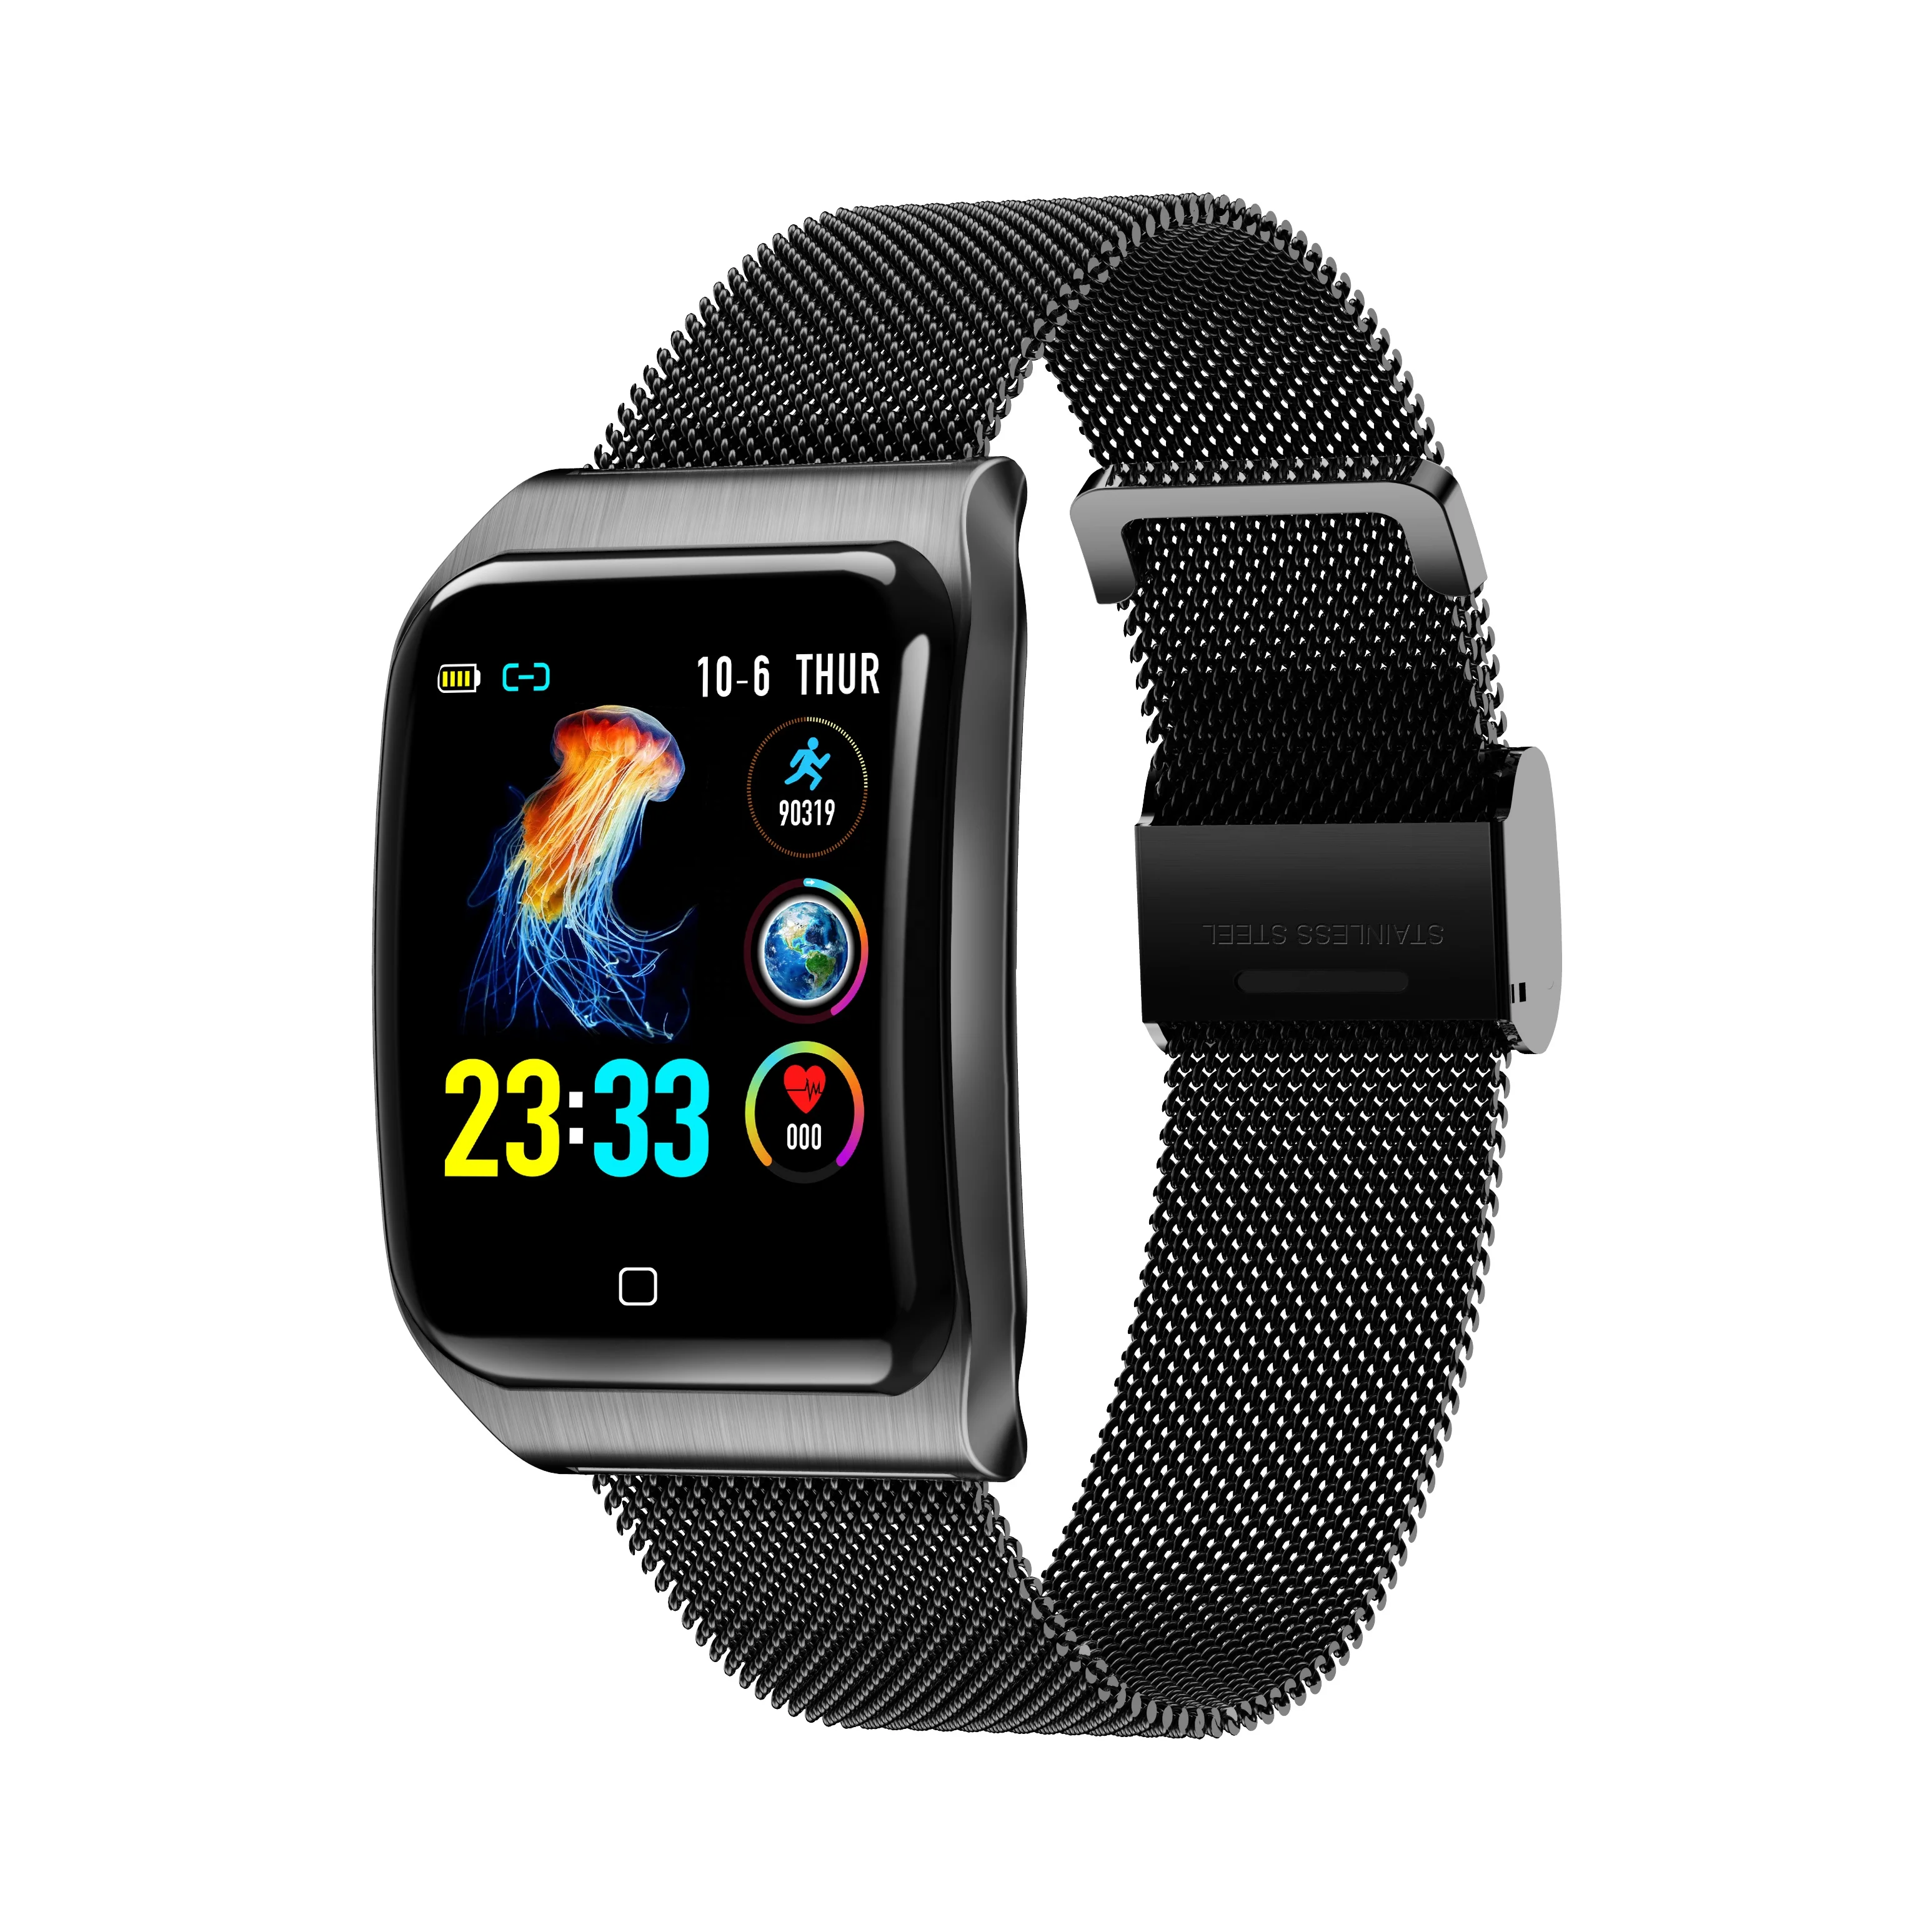 

Creatway factory F9 super slim high class Touch Screen Smart Watch fitness tracker new smartwatch, Silver, black, gold